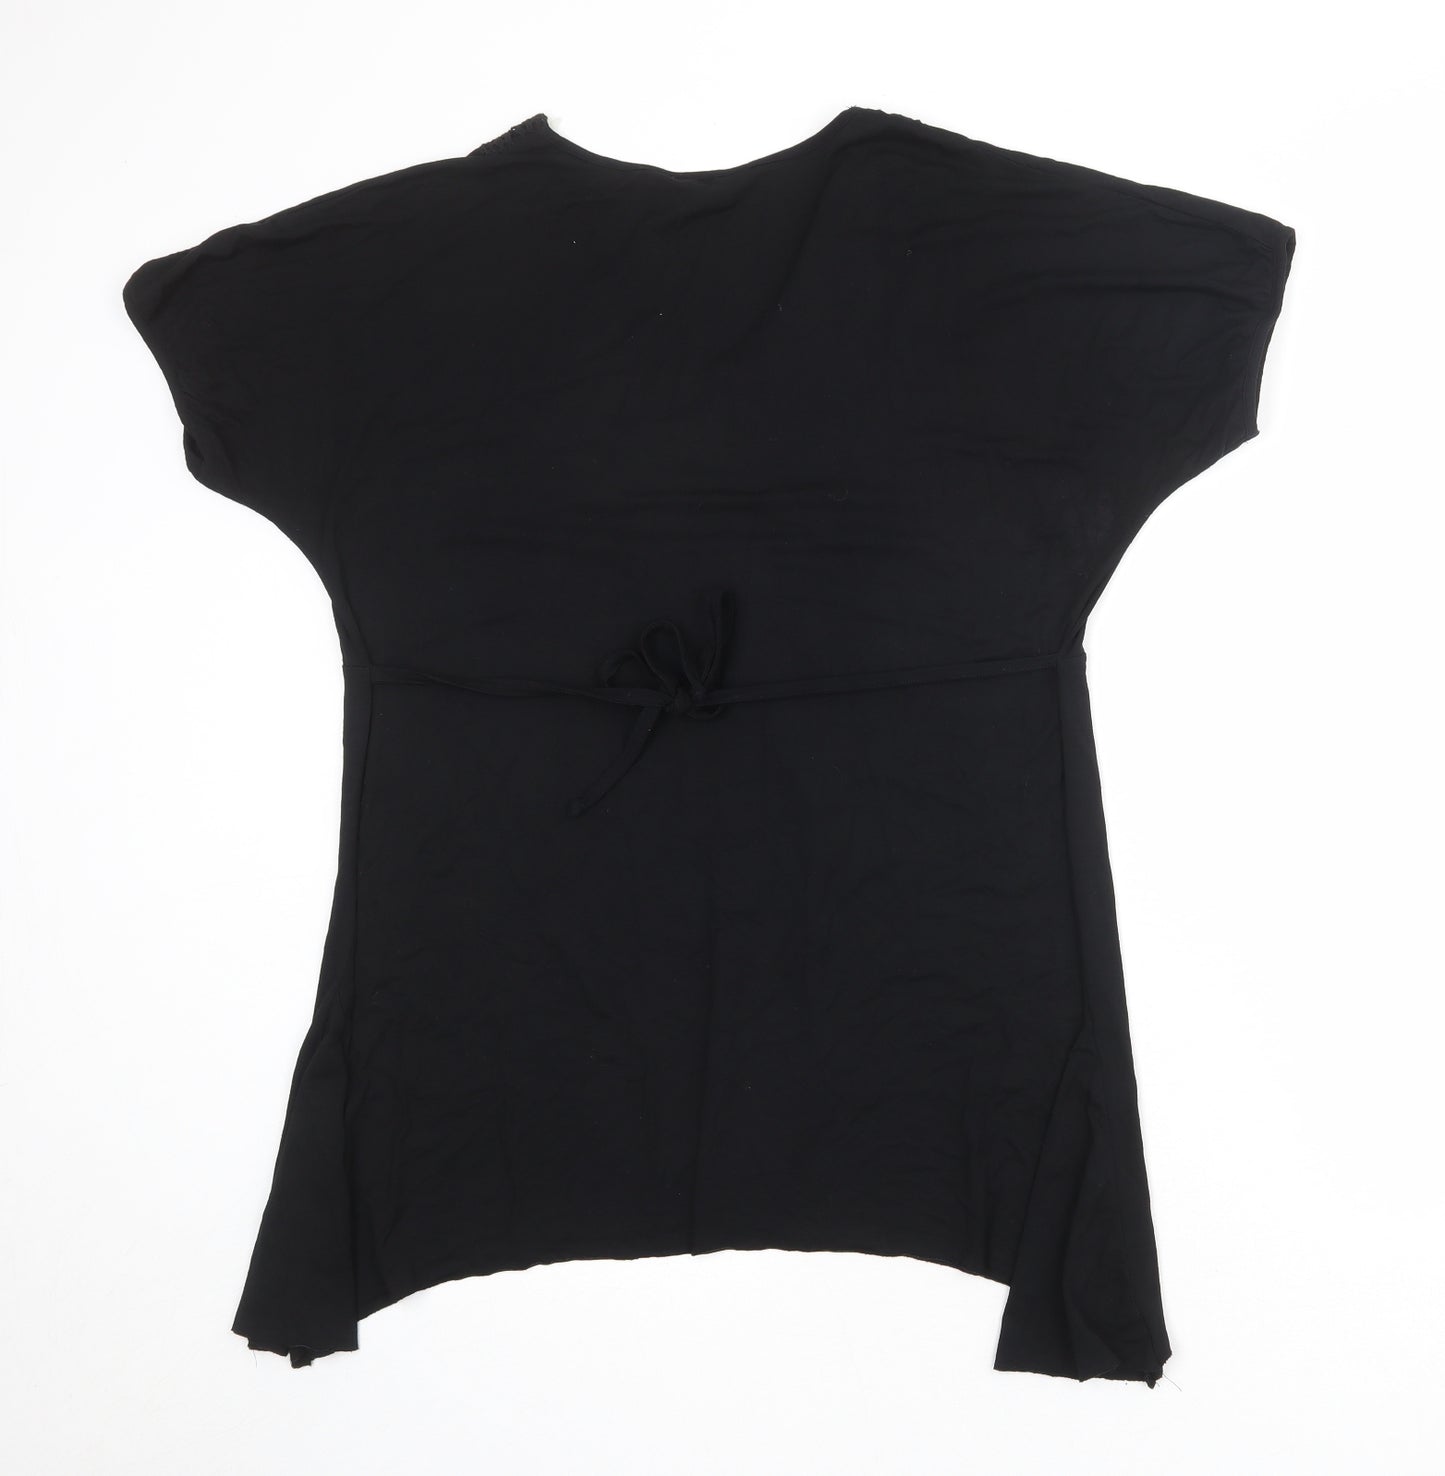 Yours Womens Black Viscose Basic T-Shirt Size 18 V-Neck - Asymmetric Crocheted Lace Trim